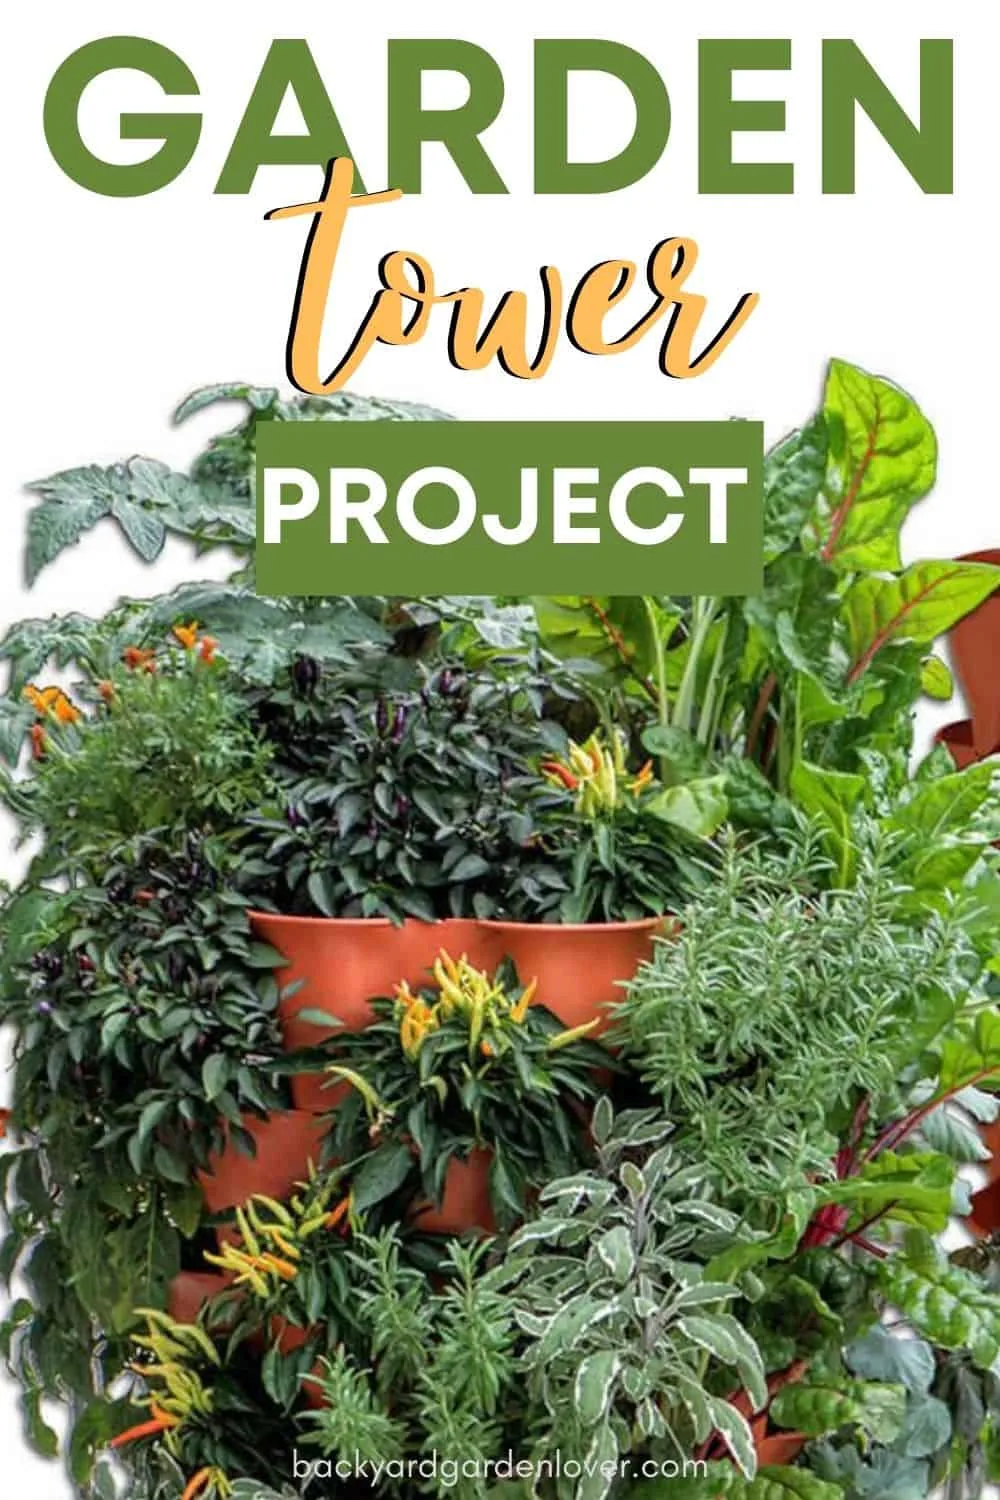 Garden tower project - Pinterest image